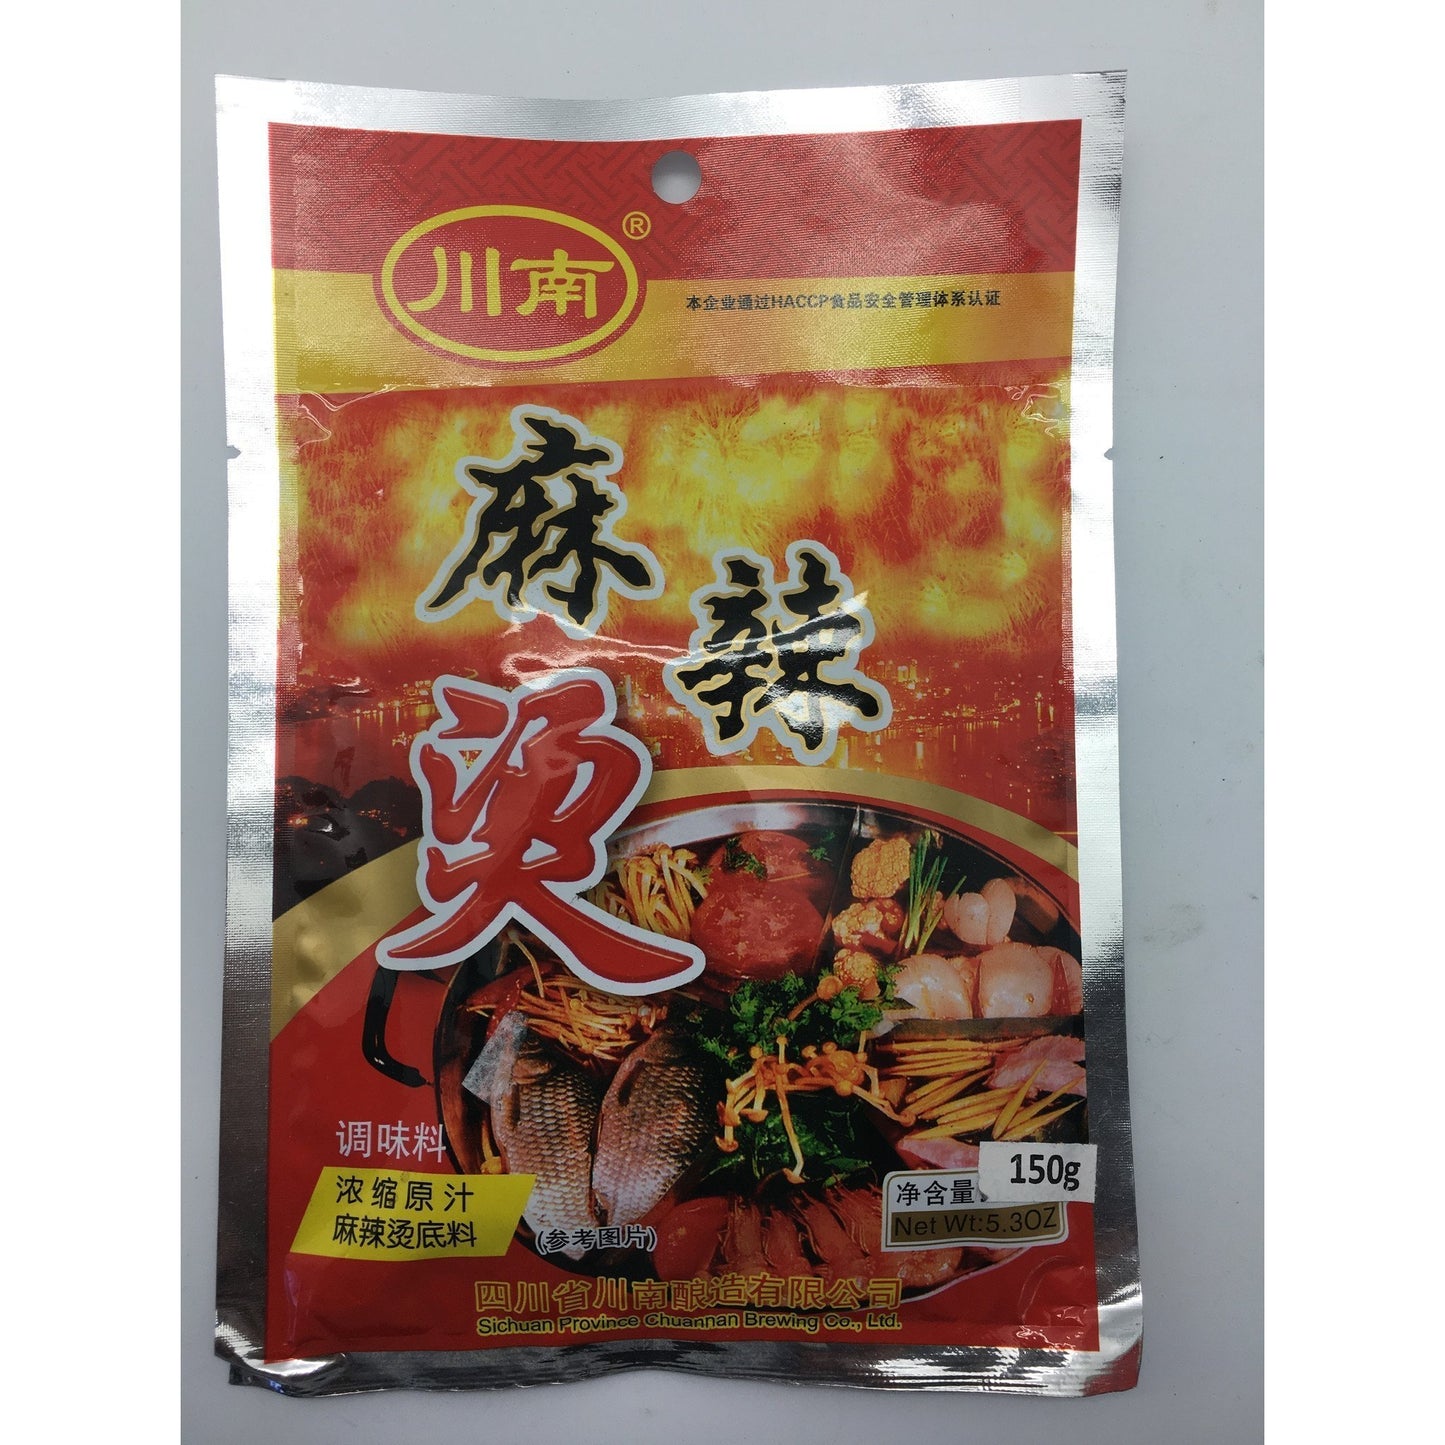 Q011H Chuan Nan Brand - Hot Pot Soup Base 150g - 60 bags / 1 CTN - New Eastland Pty Ltd - Asian food wholesalers